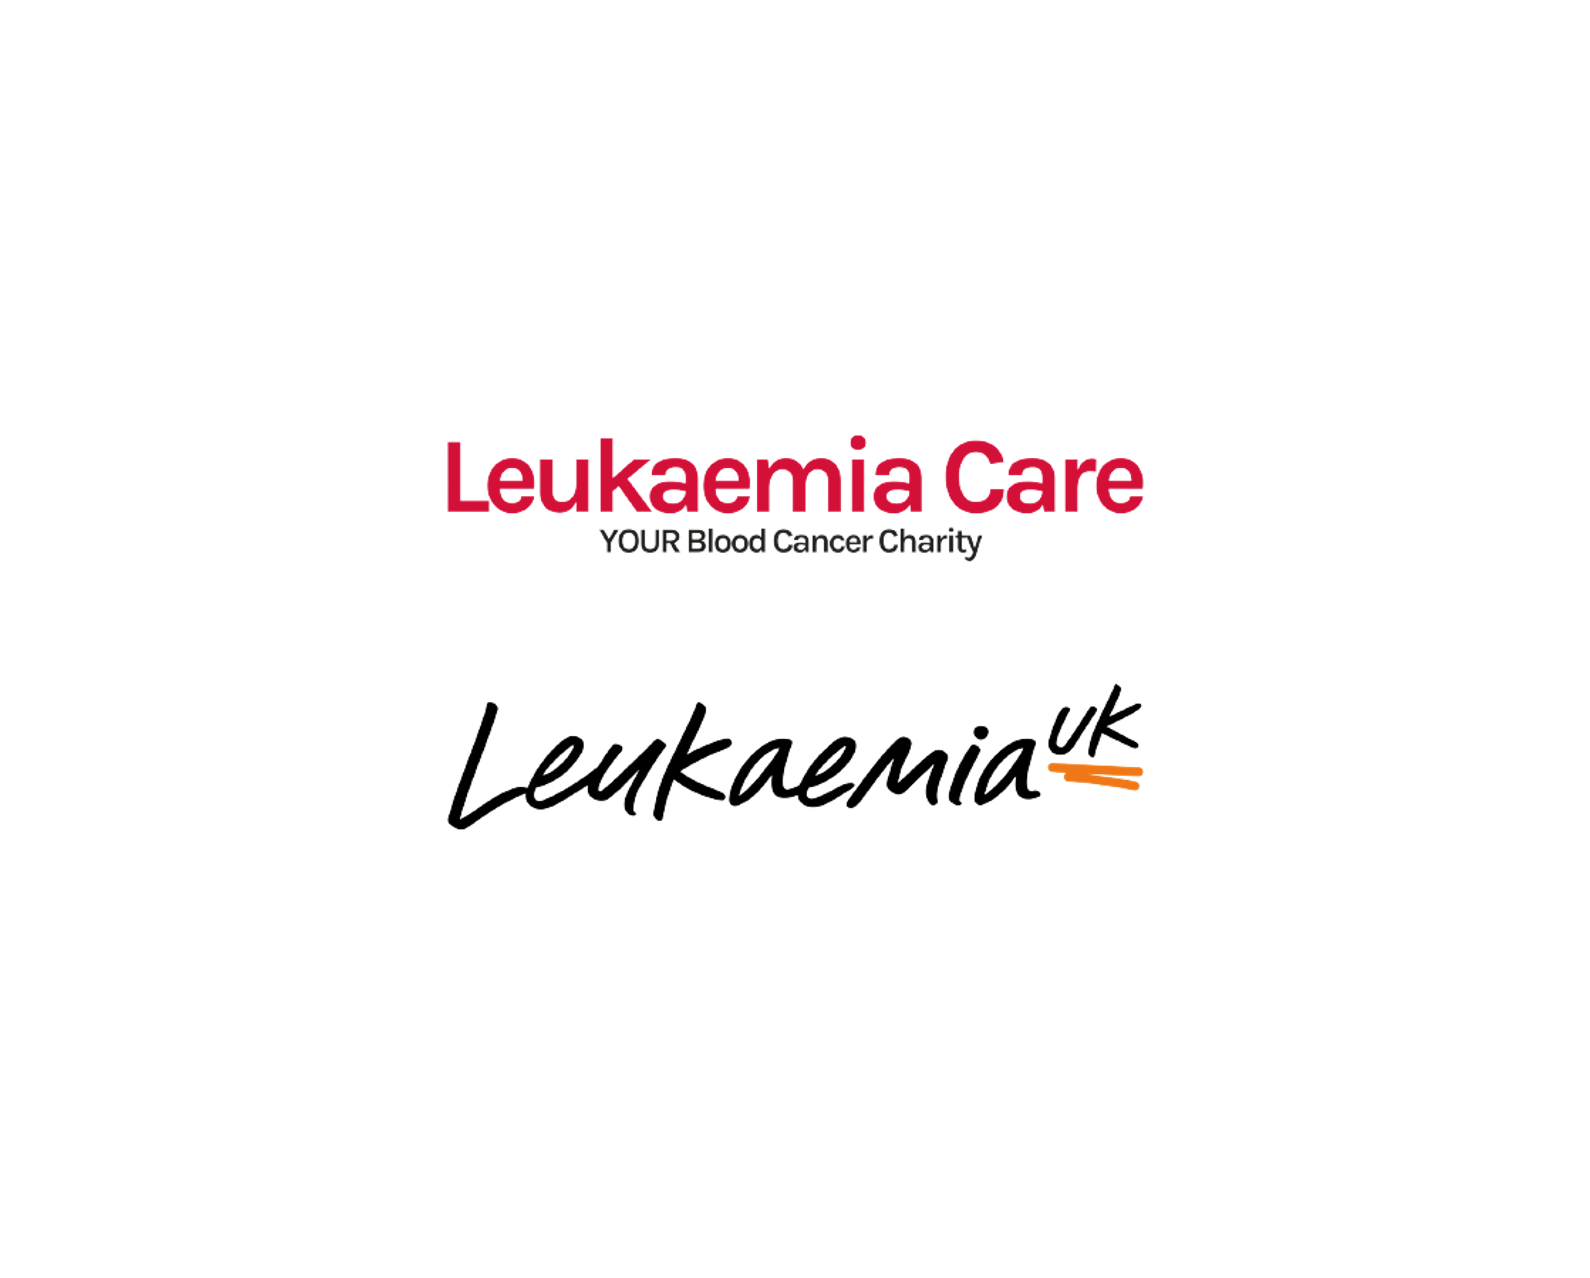 Leukaemia Care and Leukaemia UK logos